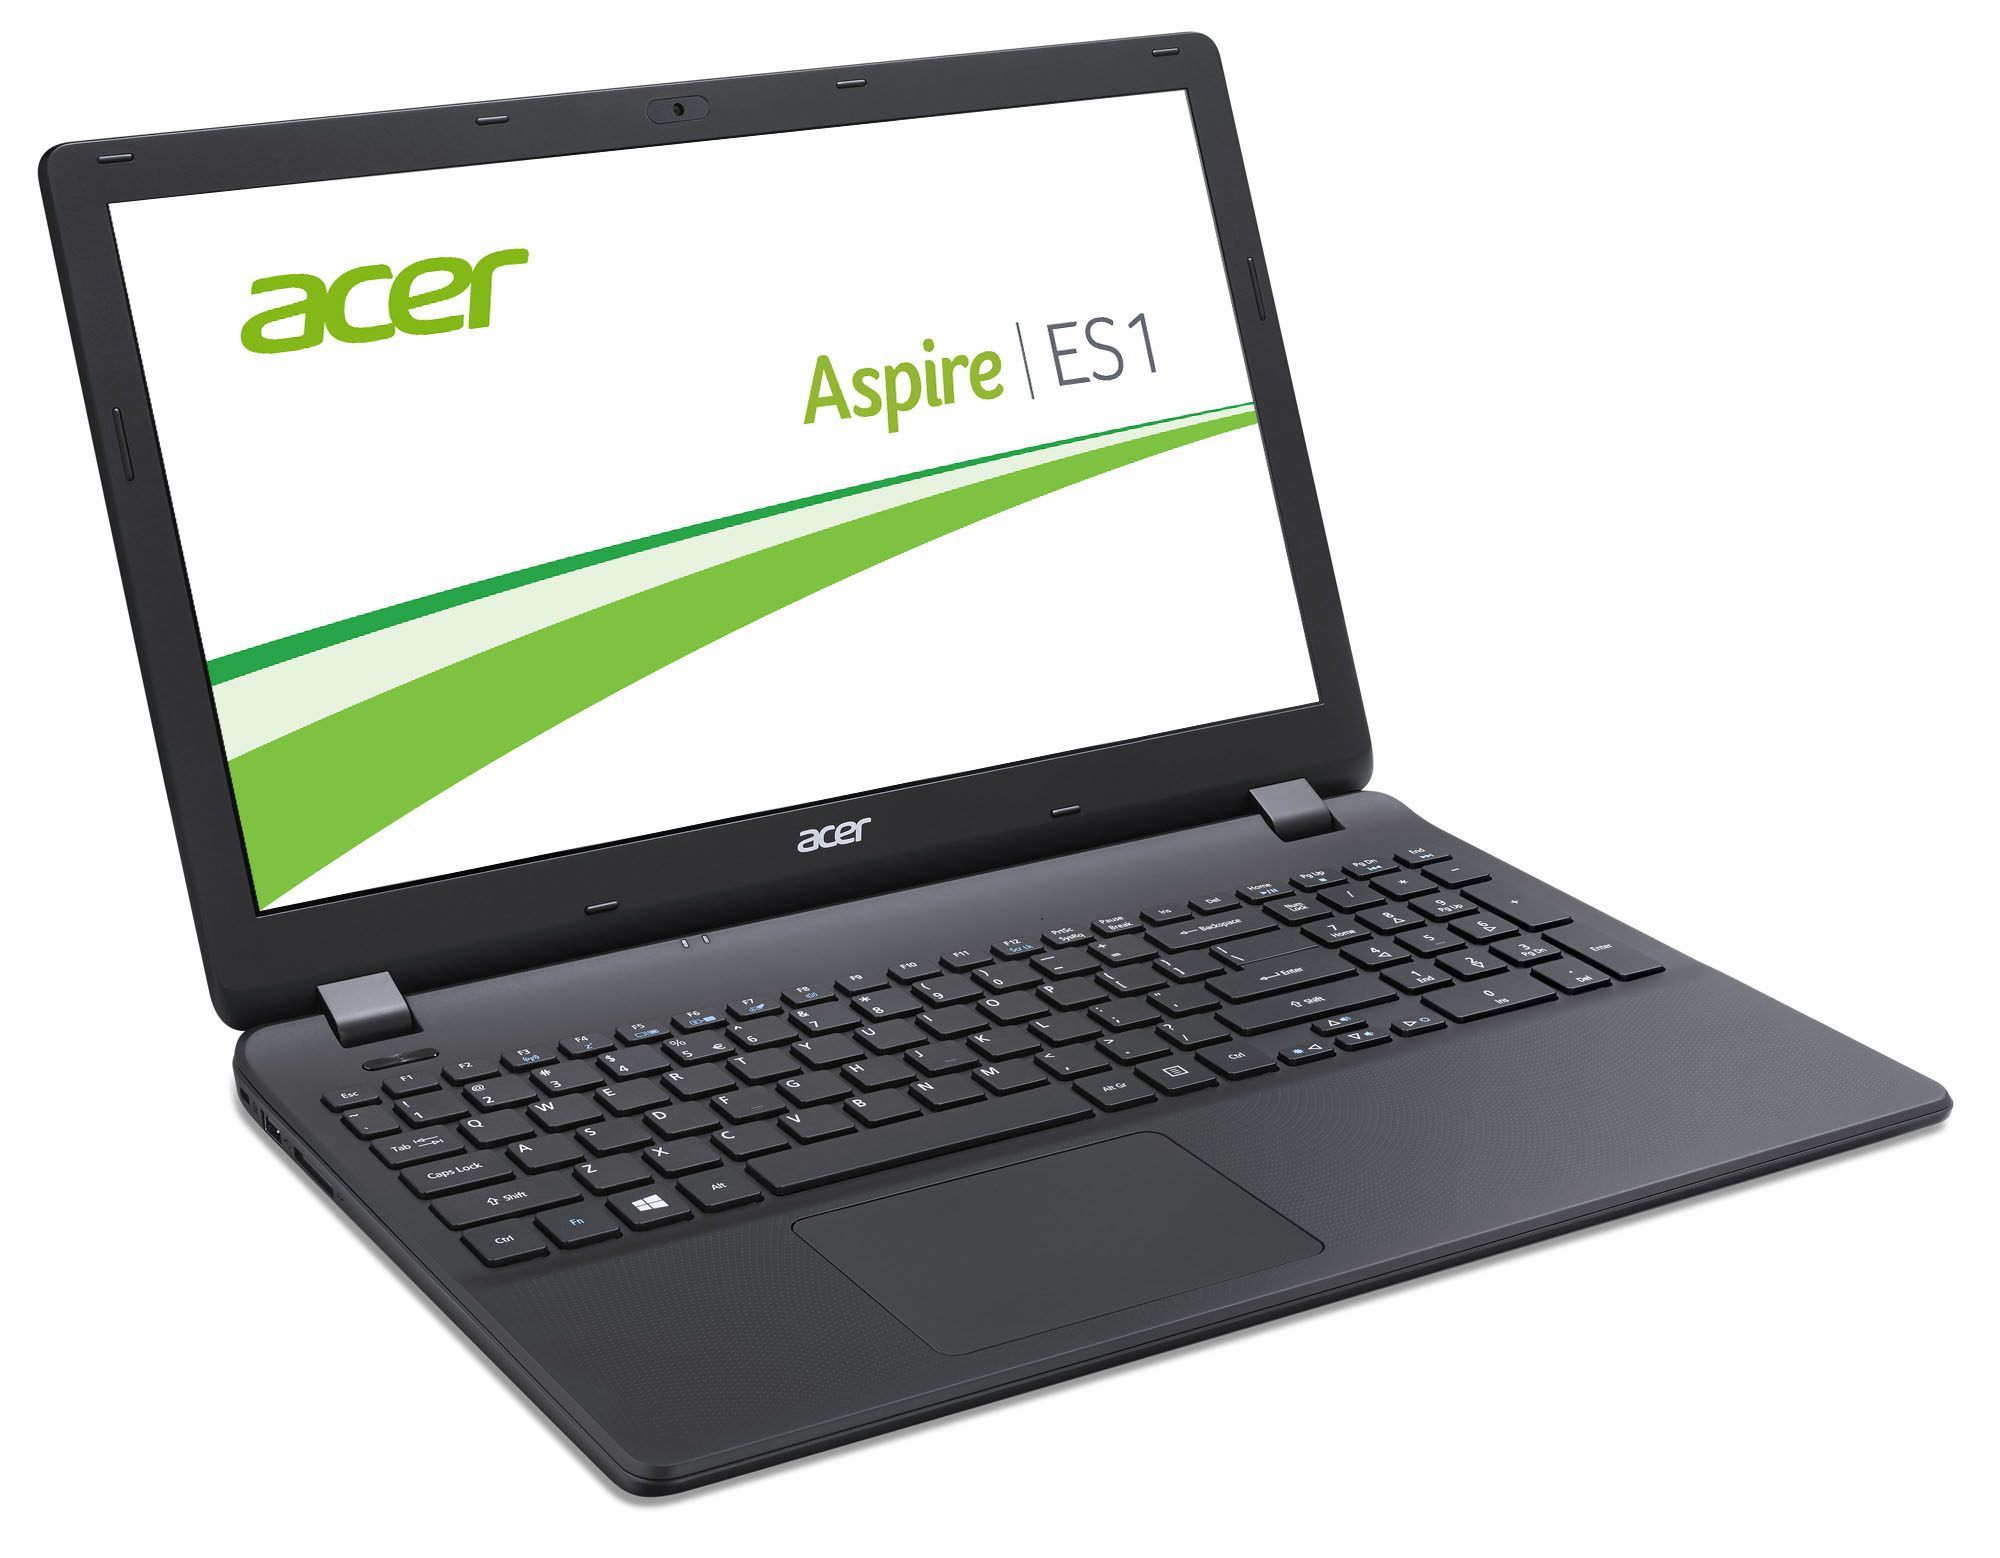 Notebook Acer ES1-531-P5H0  NX.MZ8SV.008 Pentium N3710 Quad-Core (4 CoreTM) (1.60Ghz up to 2.56 Ghz) - RAM 4GB - HDD 500GB - no DVD RW - 15.6 inch - DOS